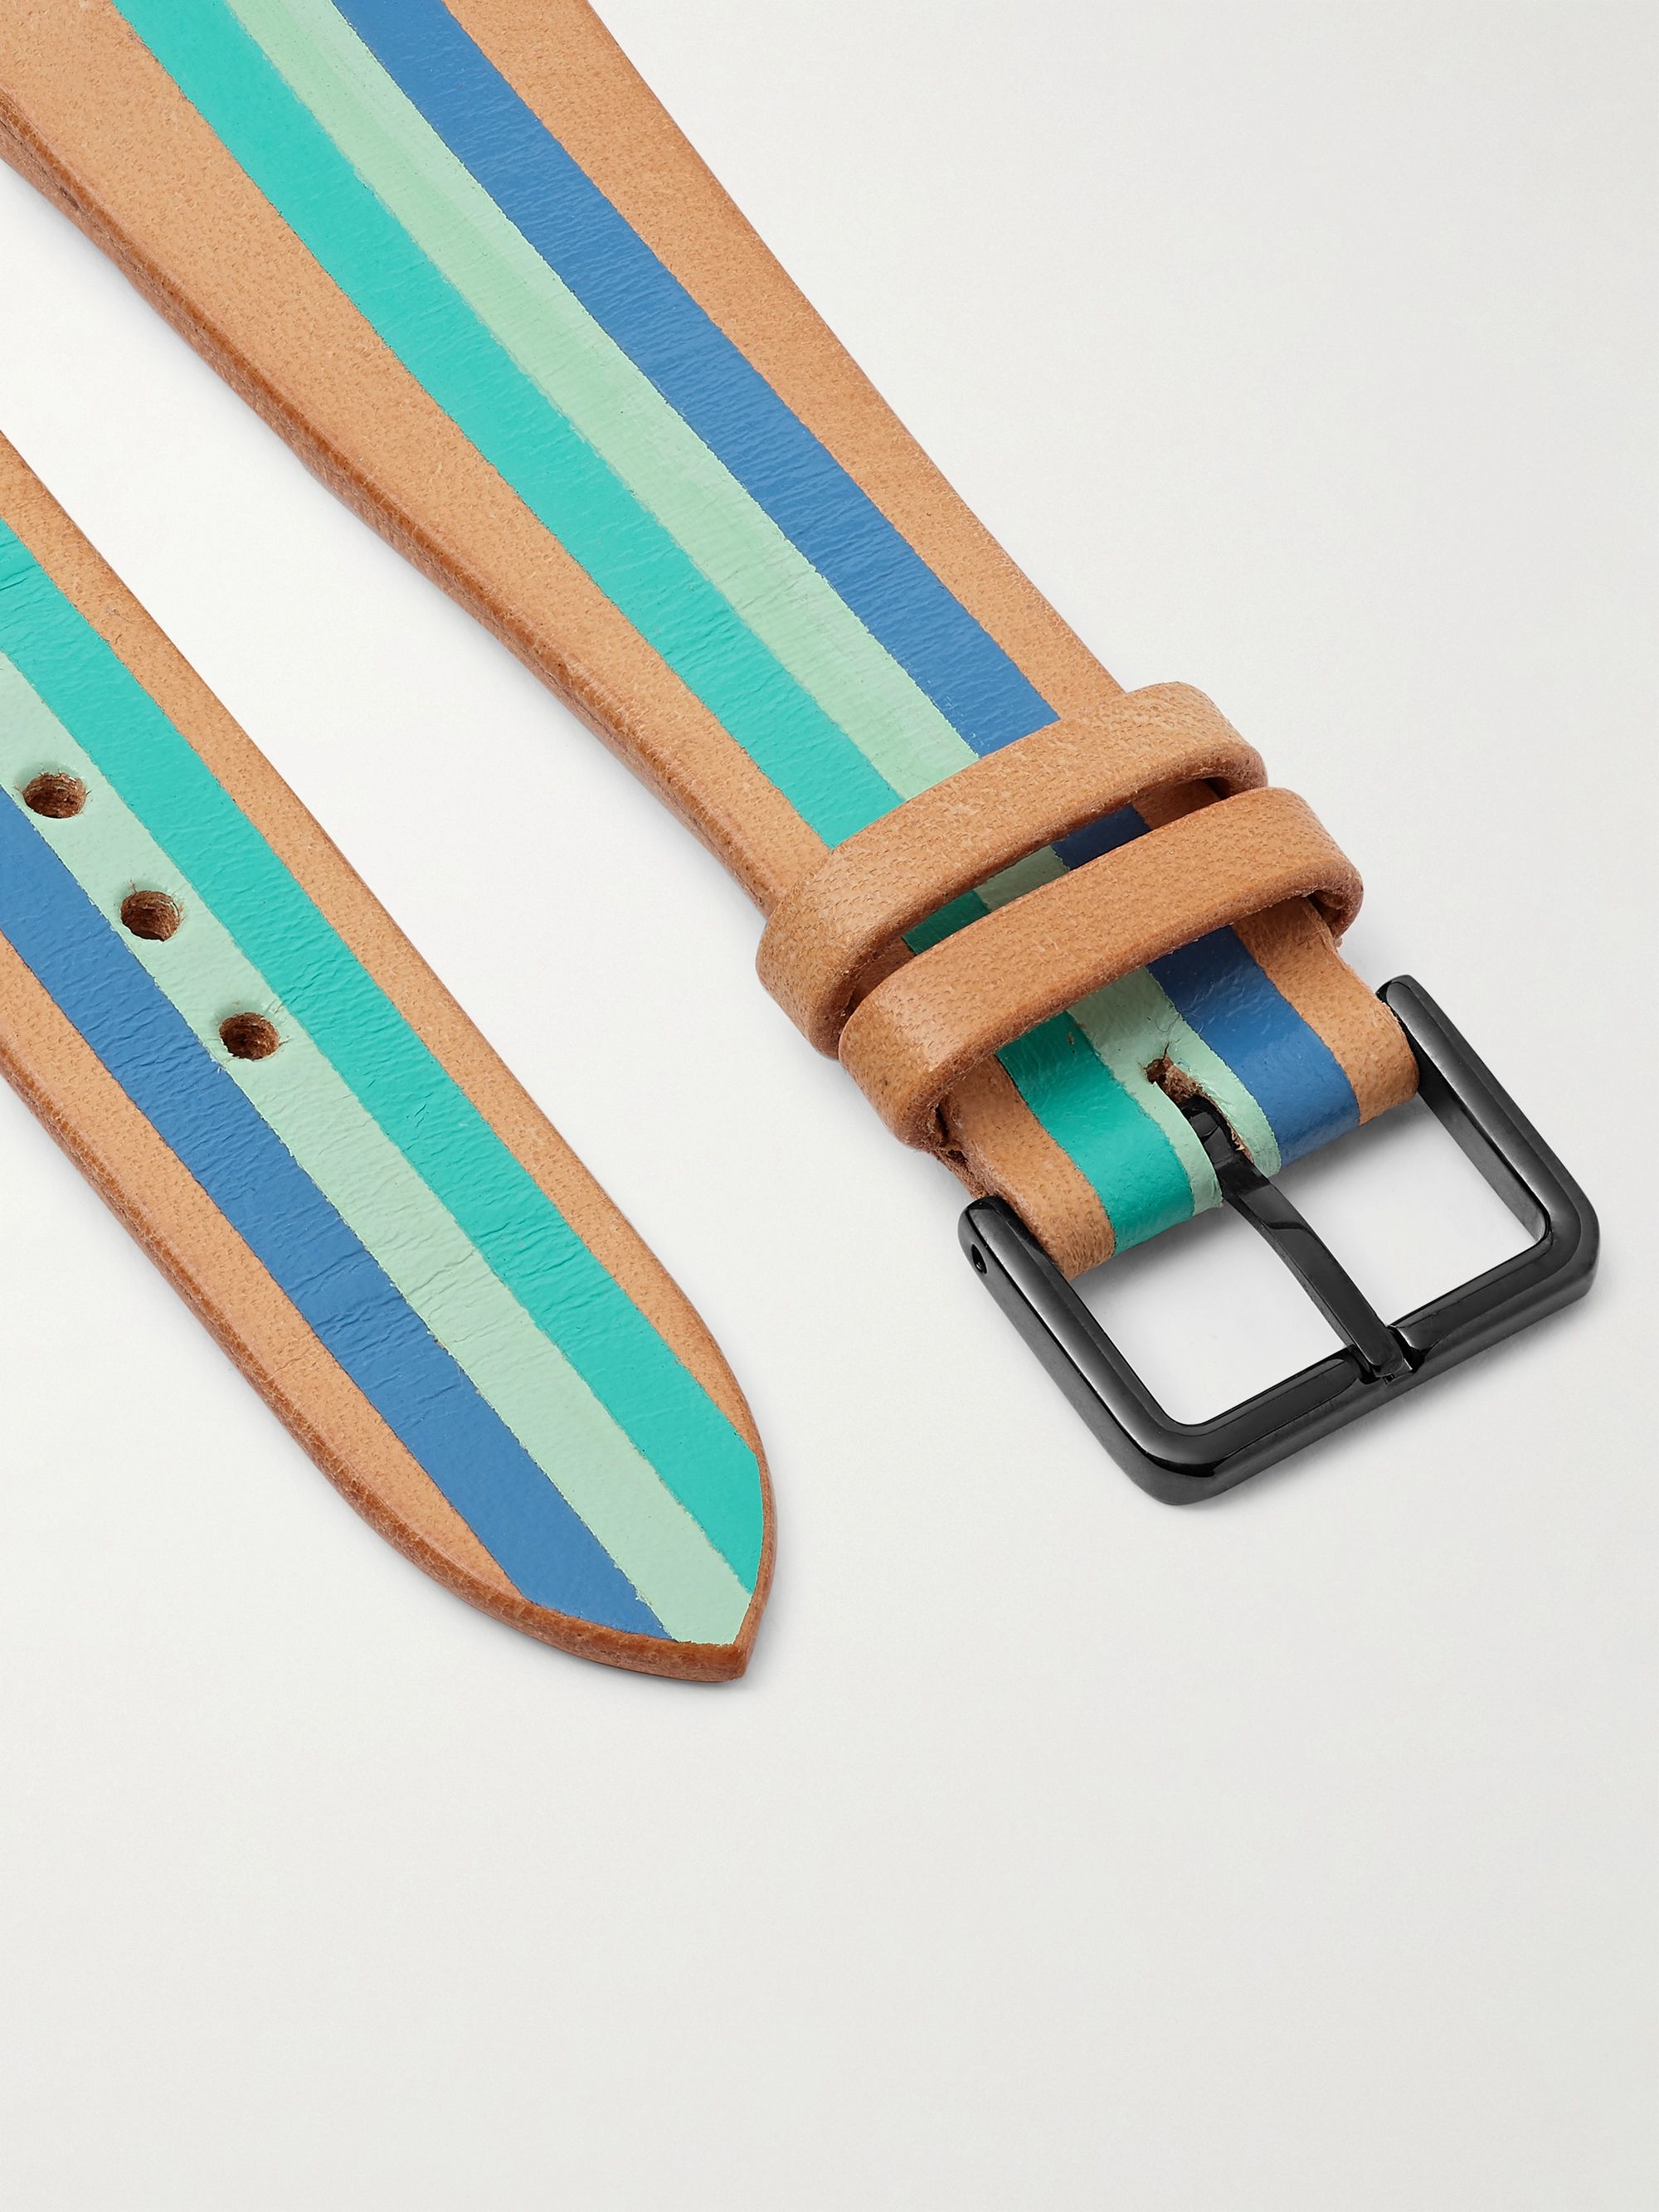 LA CALIFORNIENNE Aquamarine Striped Leather Watch Strap